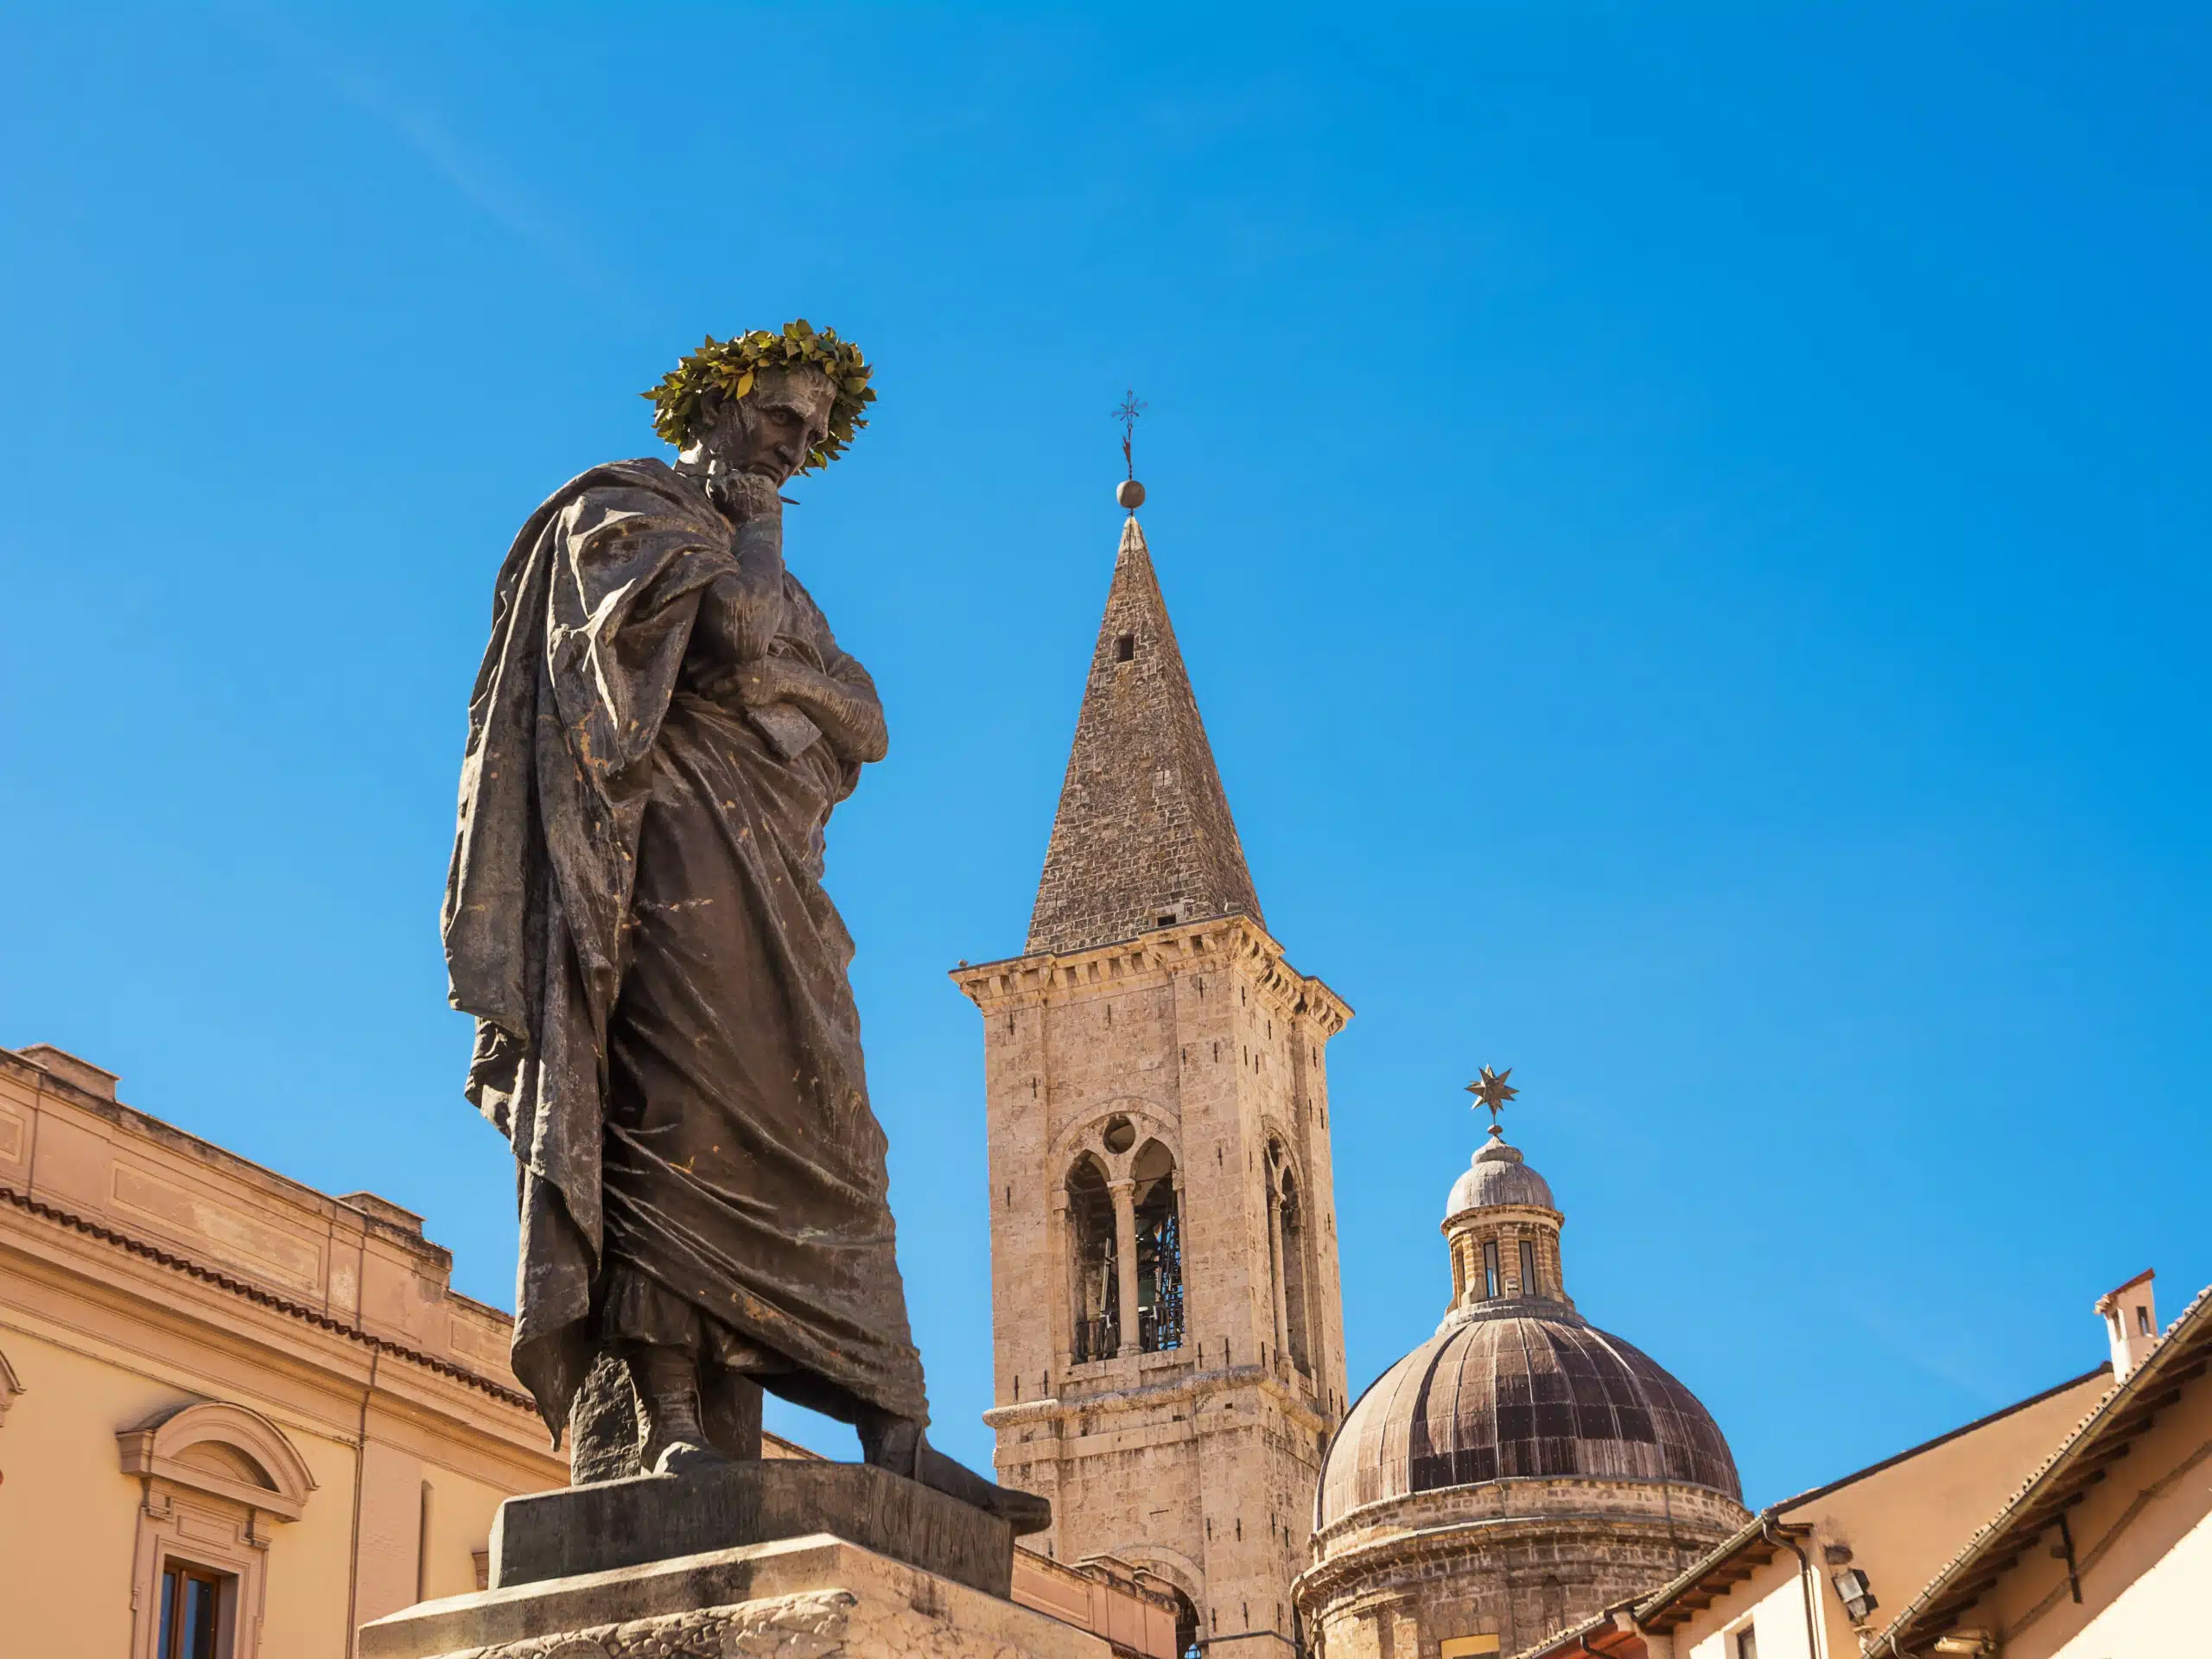 Statue of Ovid, symbol of the city of Sulmona, Italy.